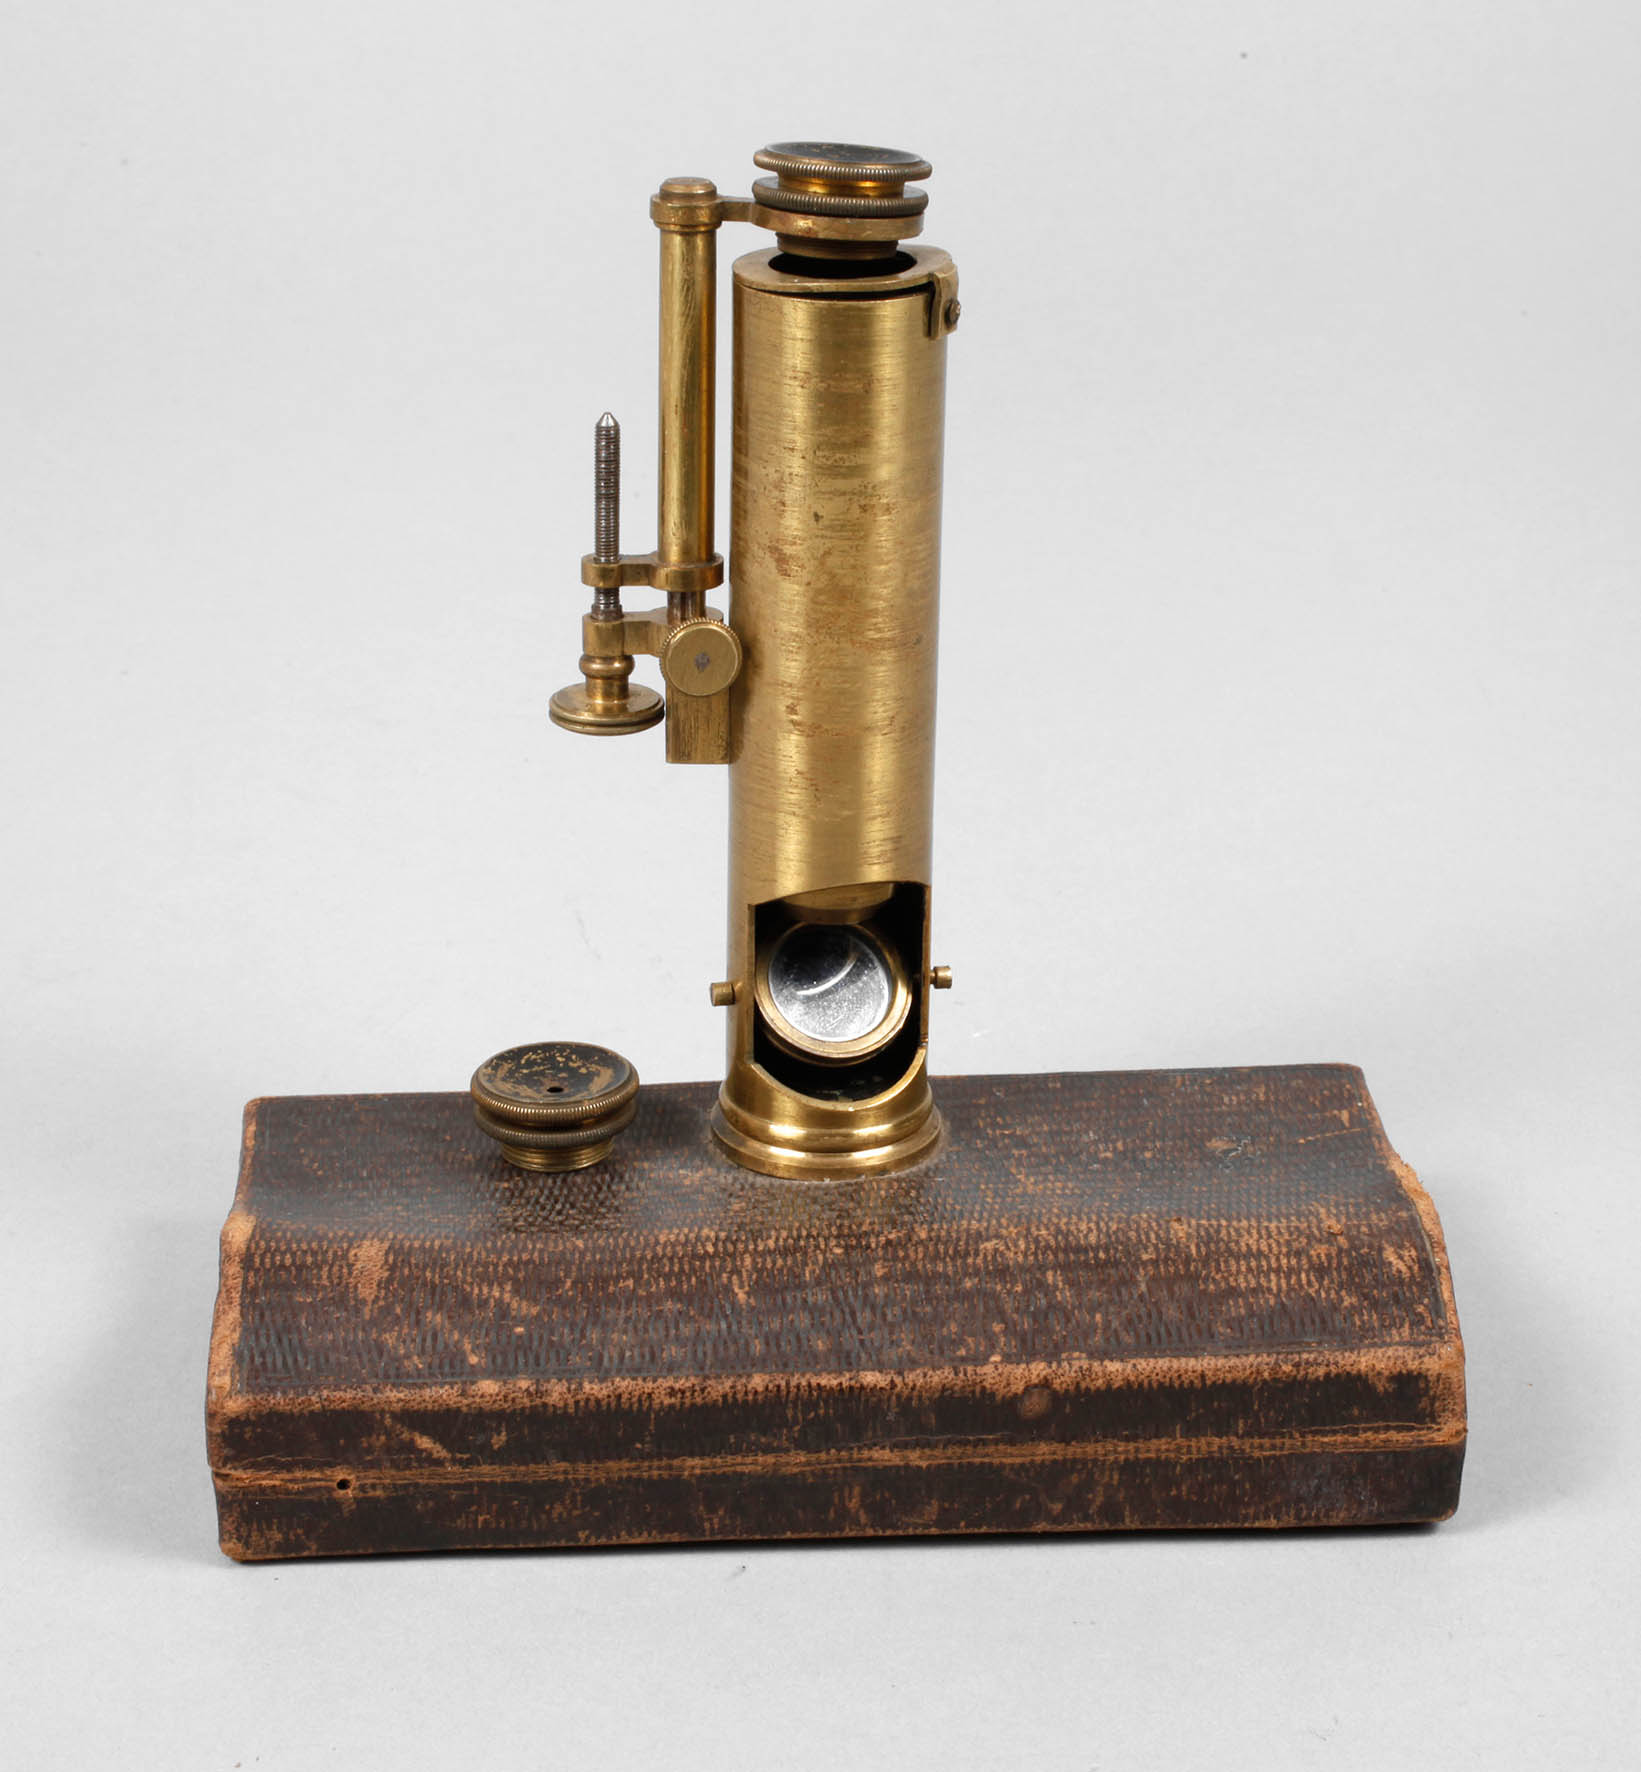 Reisemikroskop um 1850